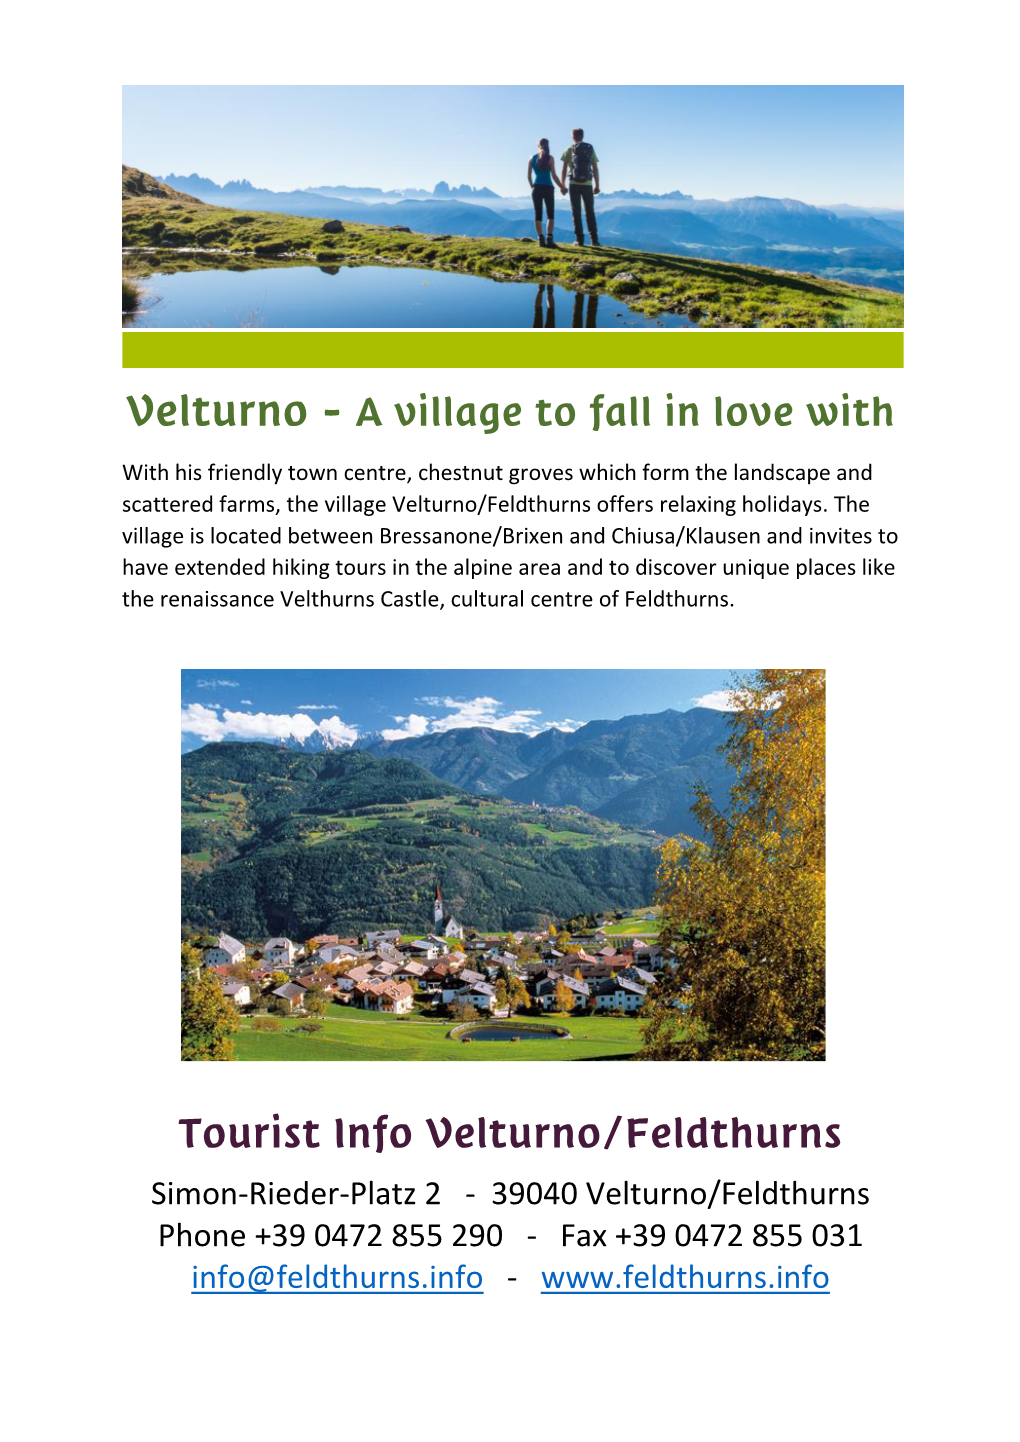 Tourist Info Velturno/Feldthurns